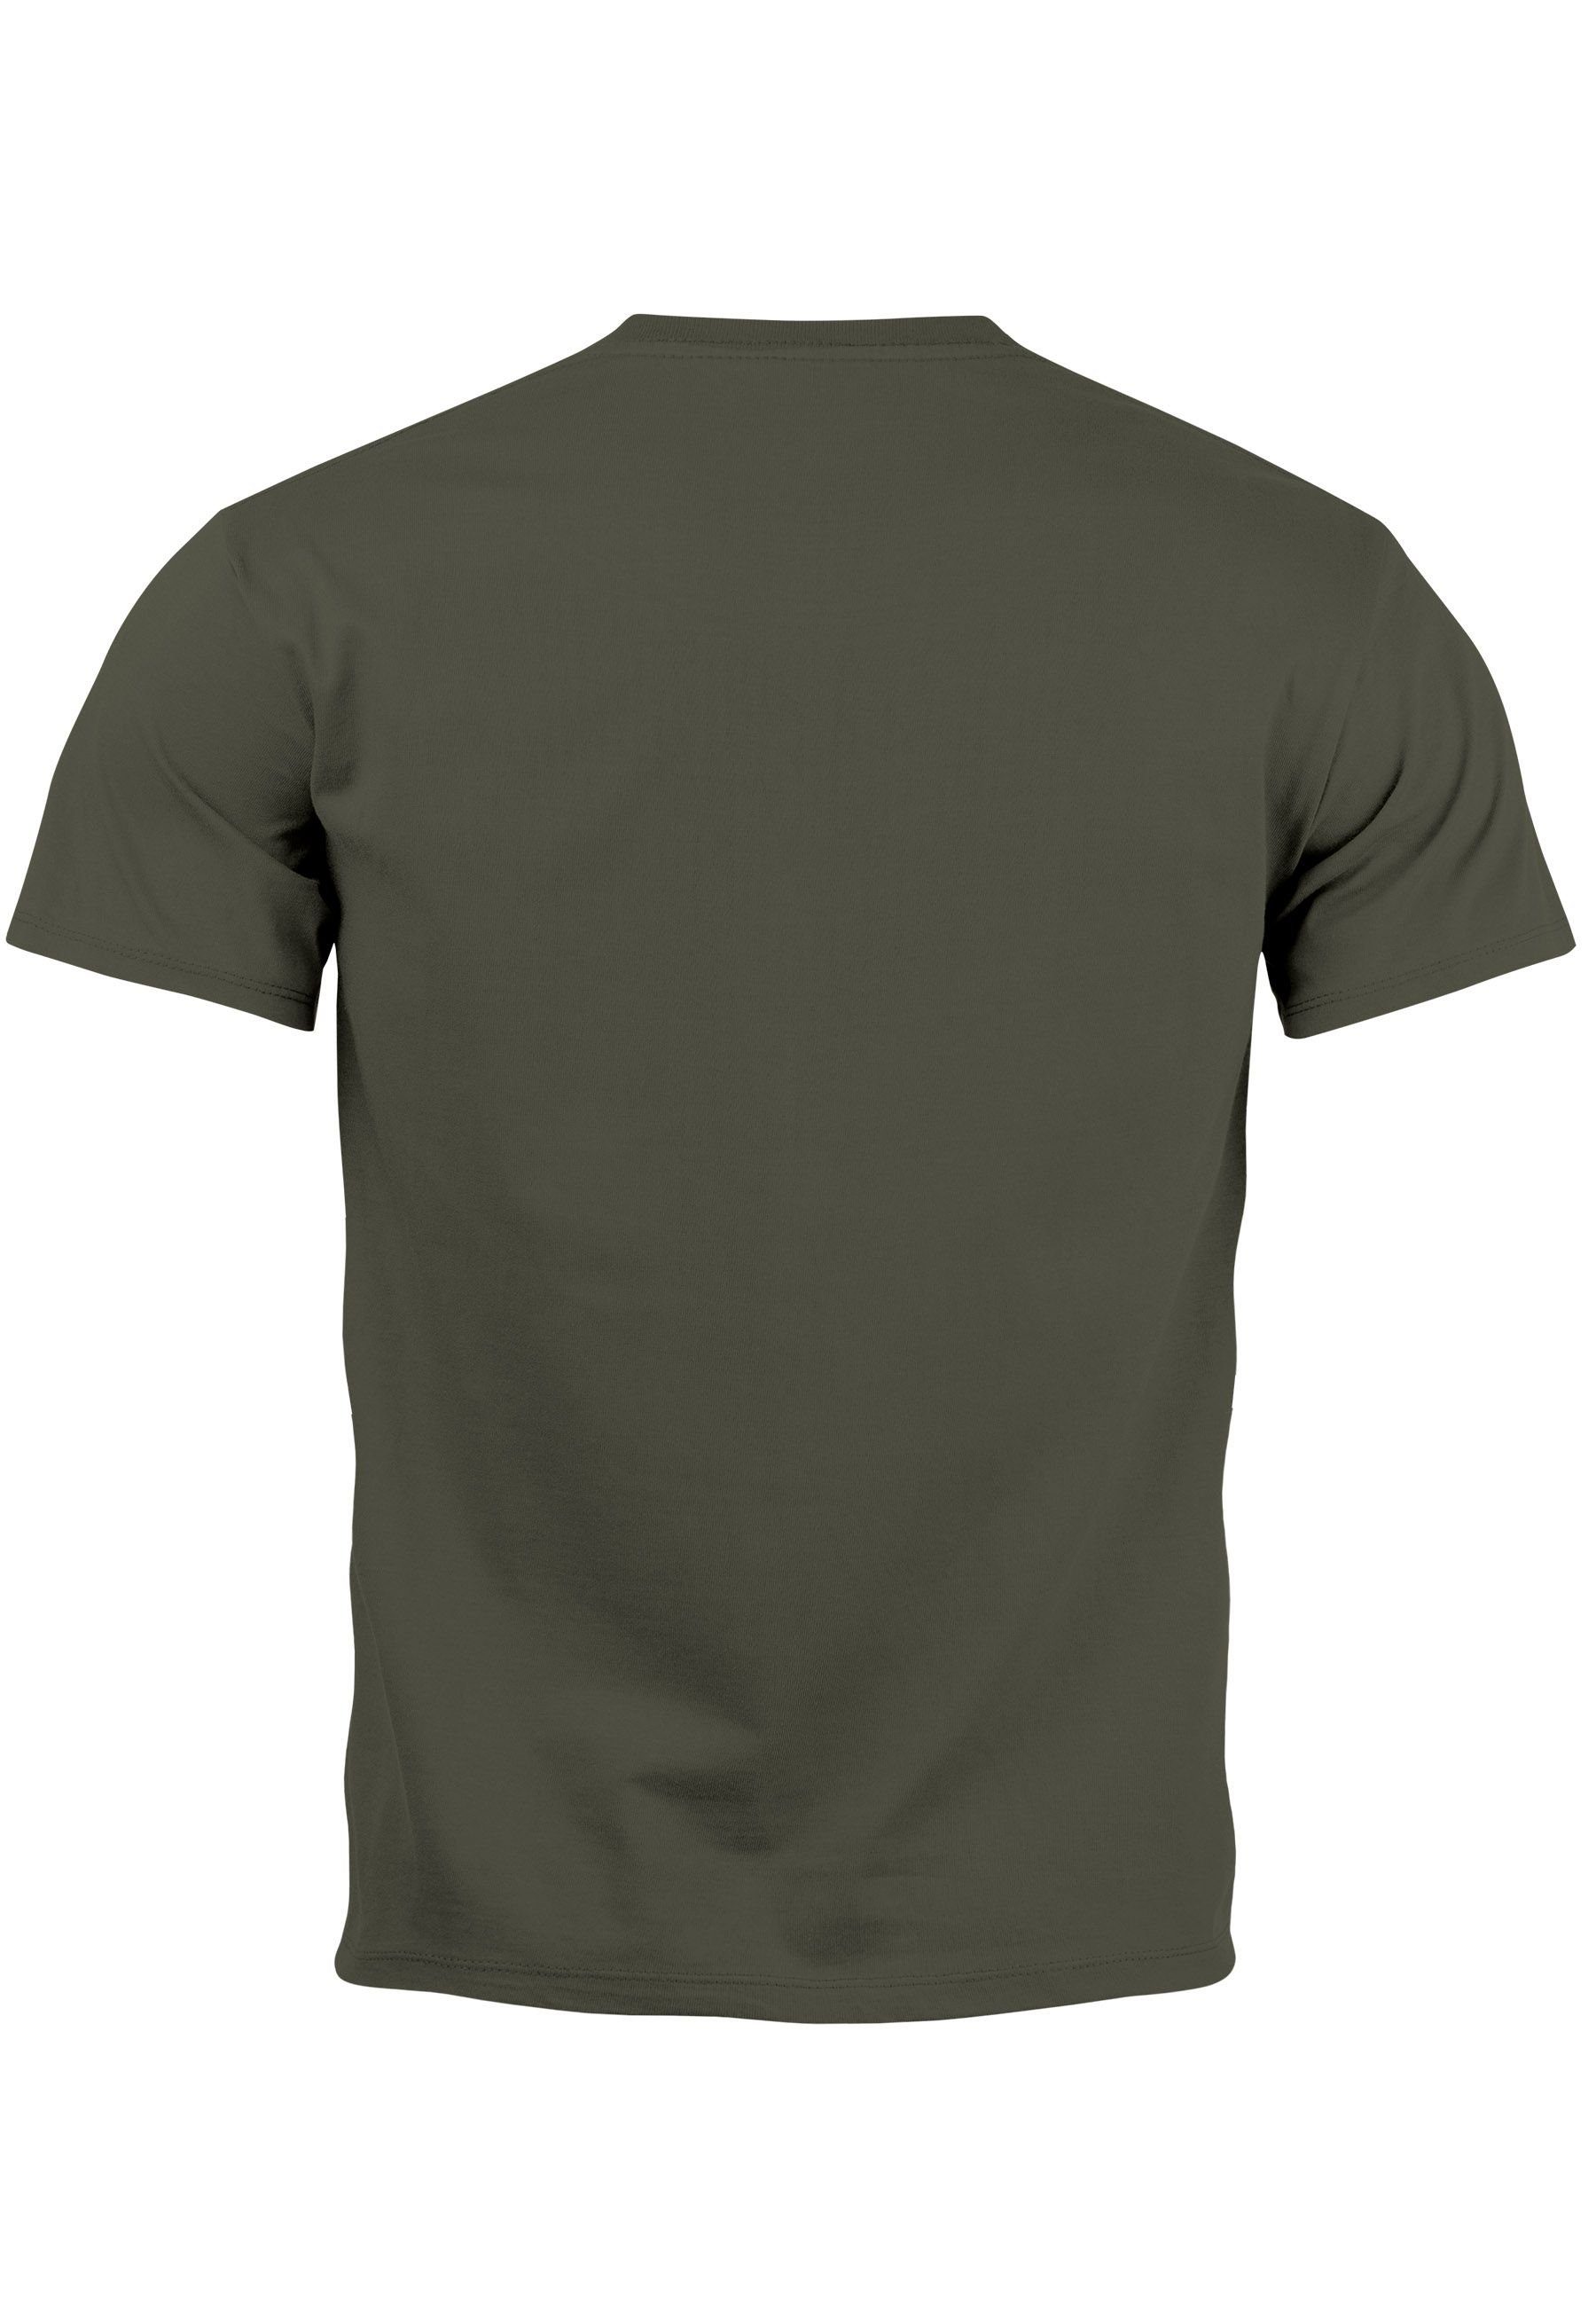 Neverless Print-Shirt Herren T-Shirt Sparta-Helm Spartaner Print mit Logo Gladiator army Print Warr Krieger